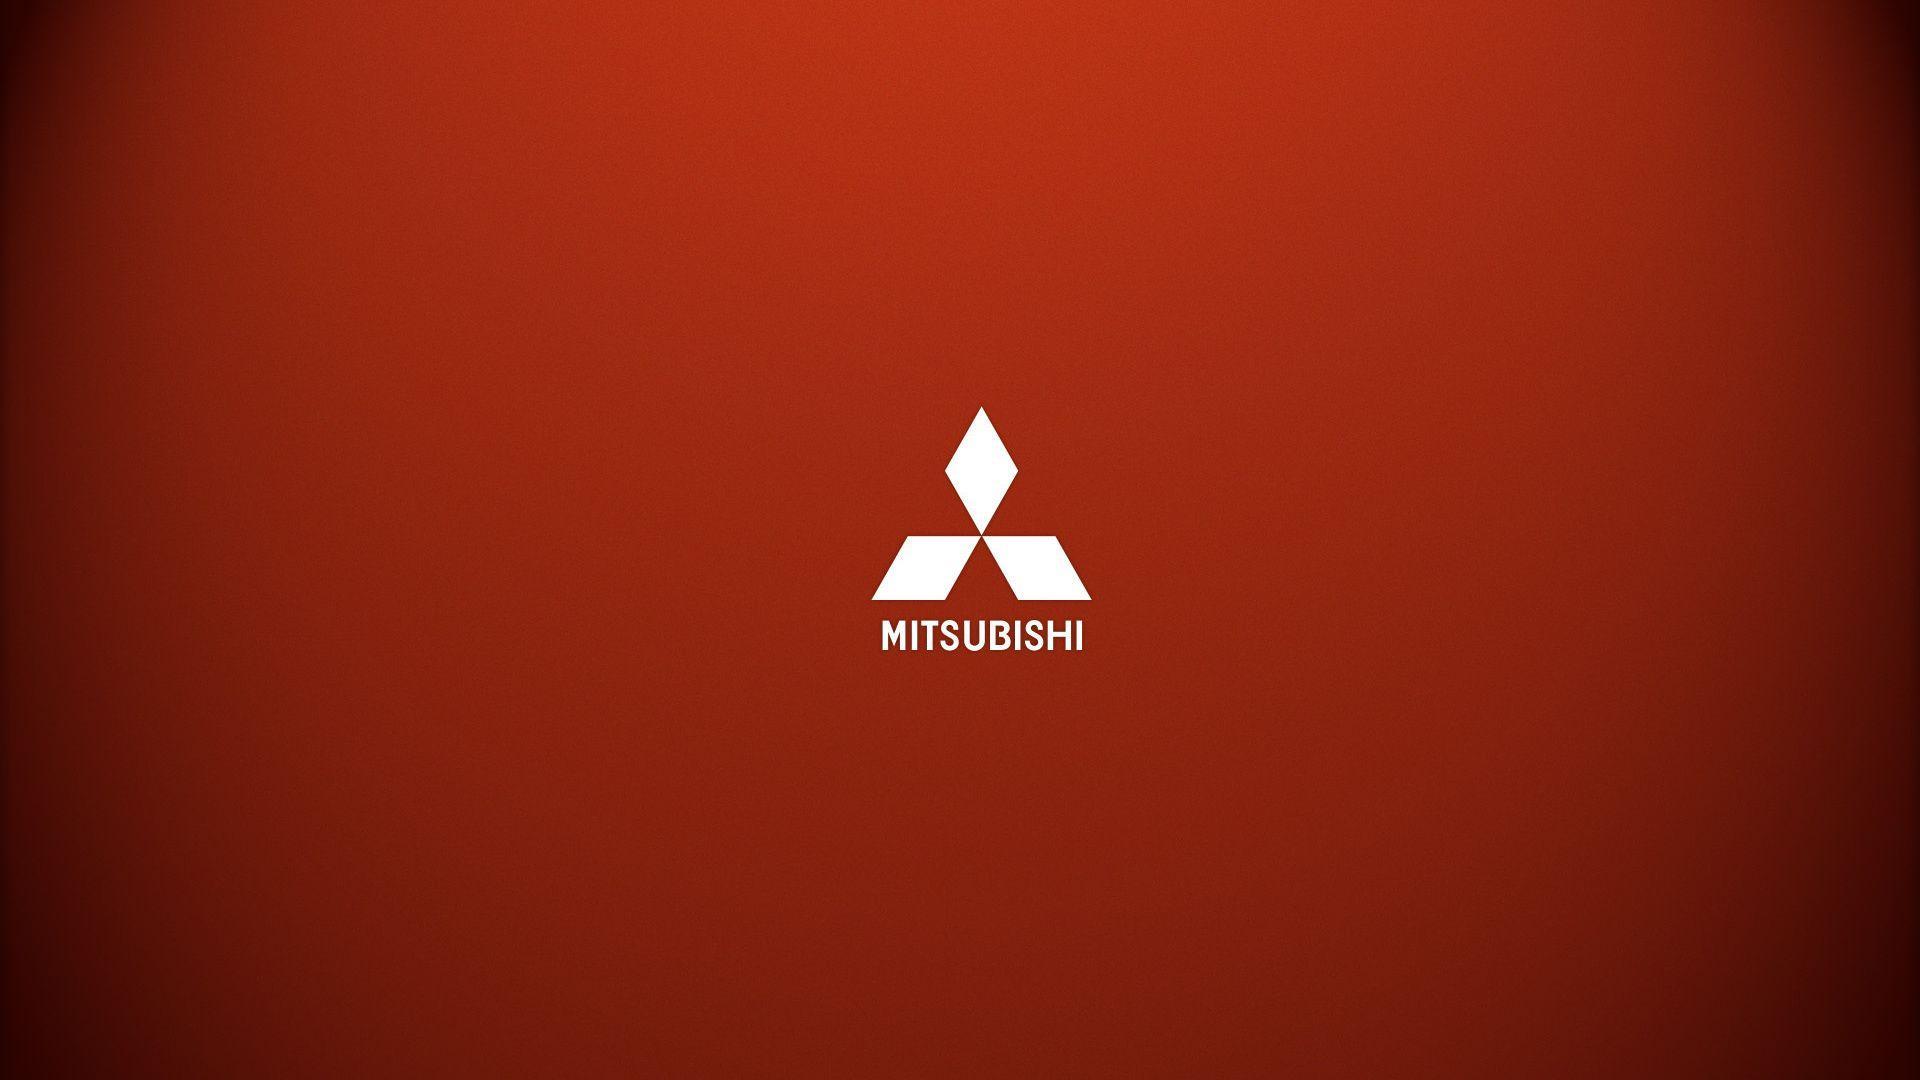 Mitsubishi Wallpapers